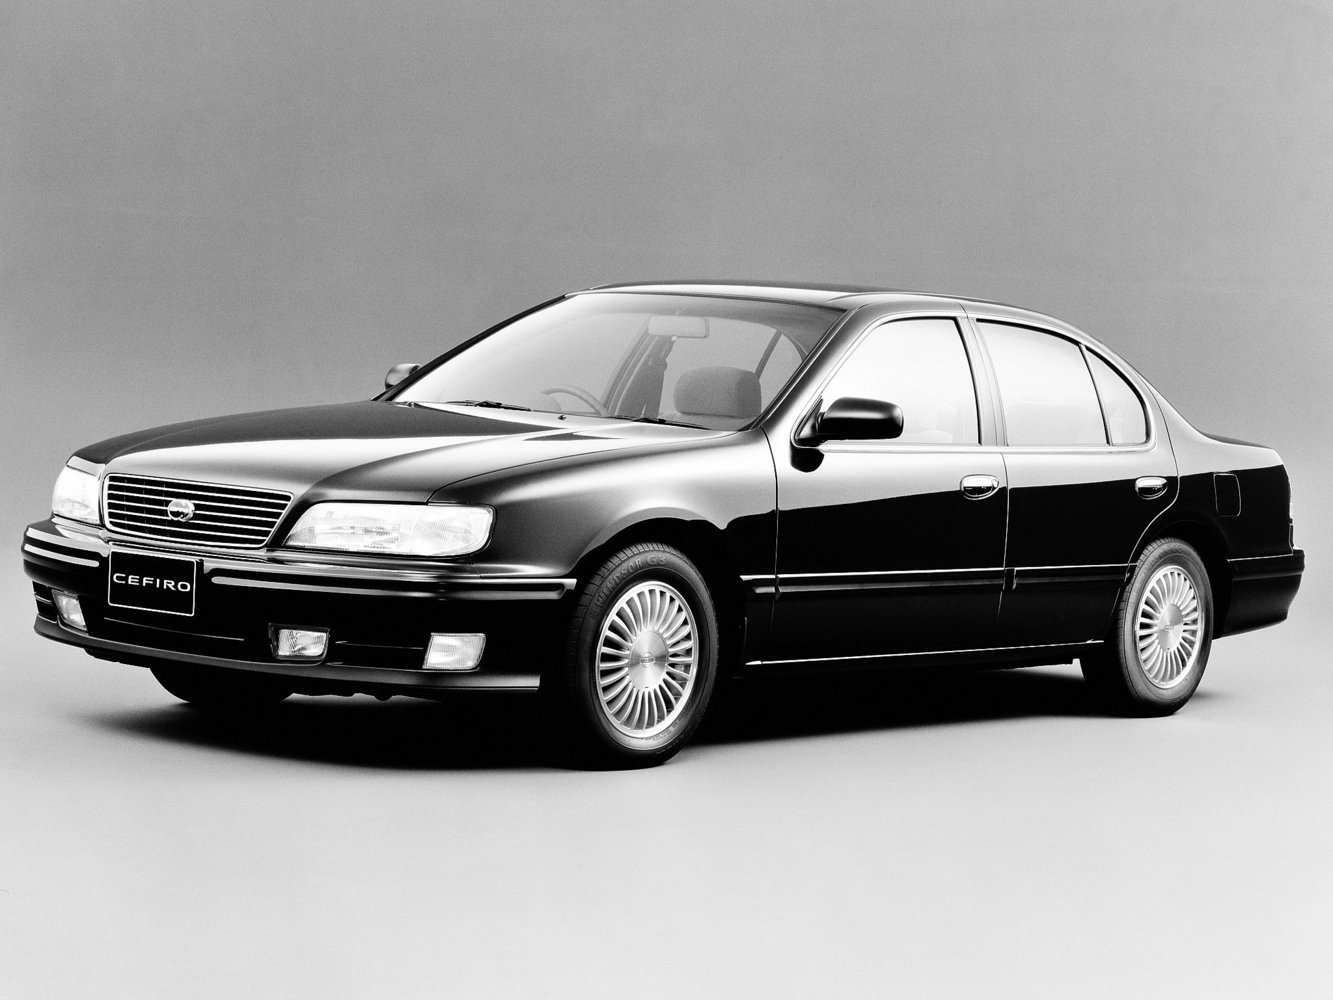 Nissan Cefiro 1994 - 1998